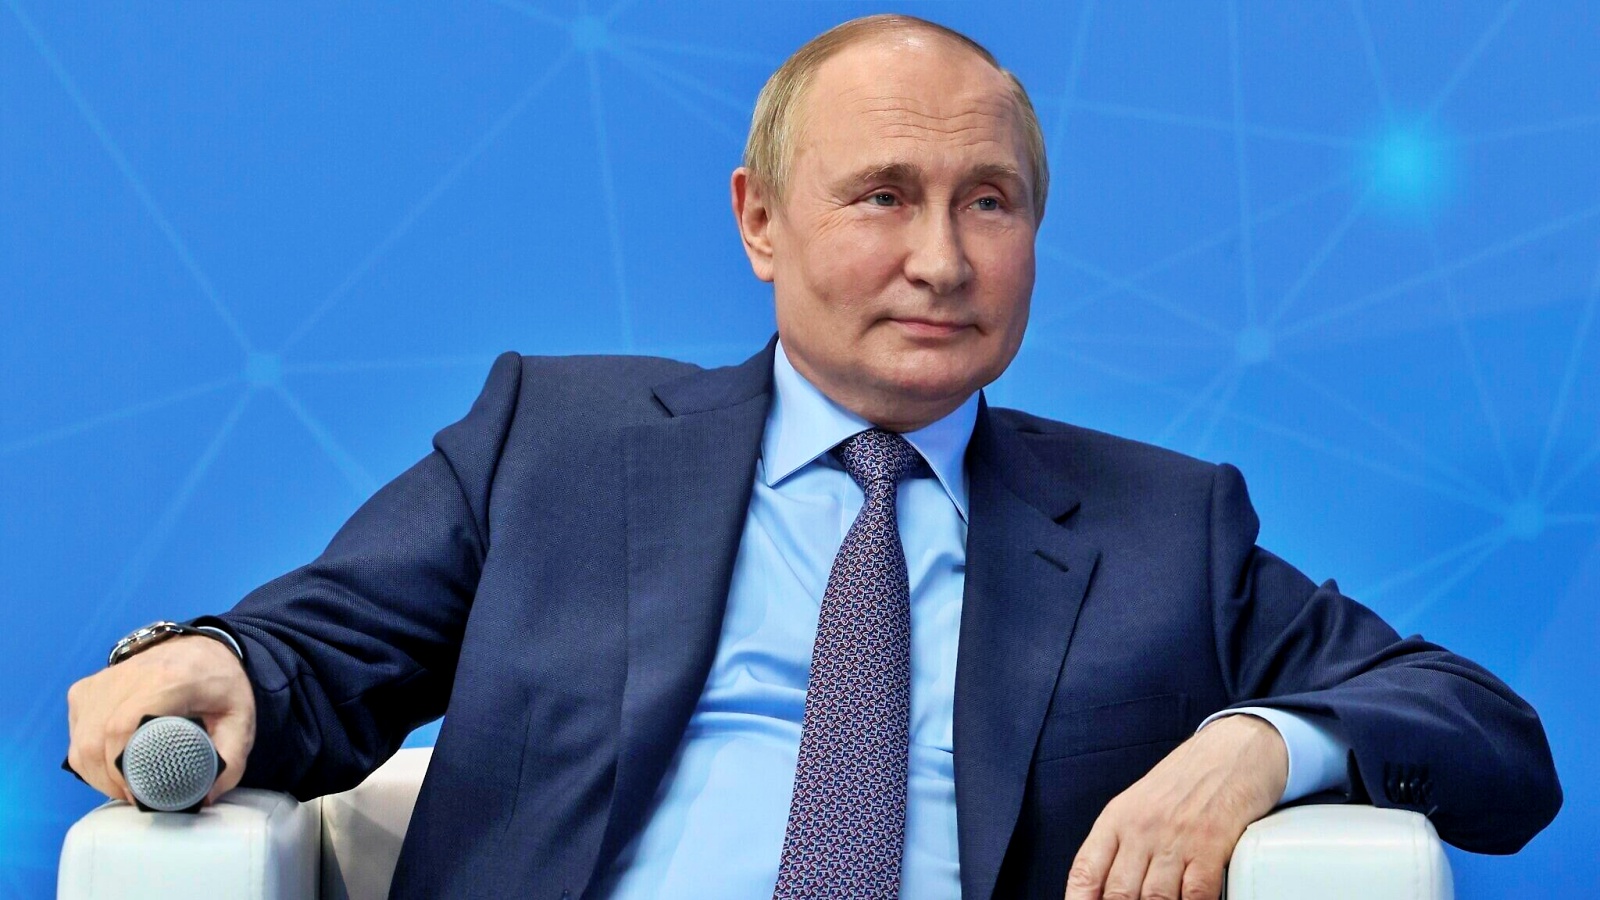 Vladimir Putin Sends Strong BRICS Message Against the West